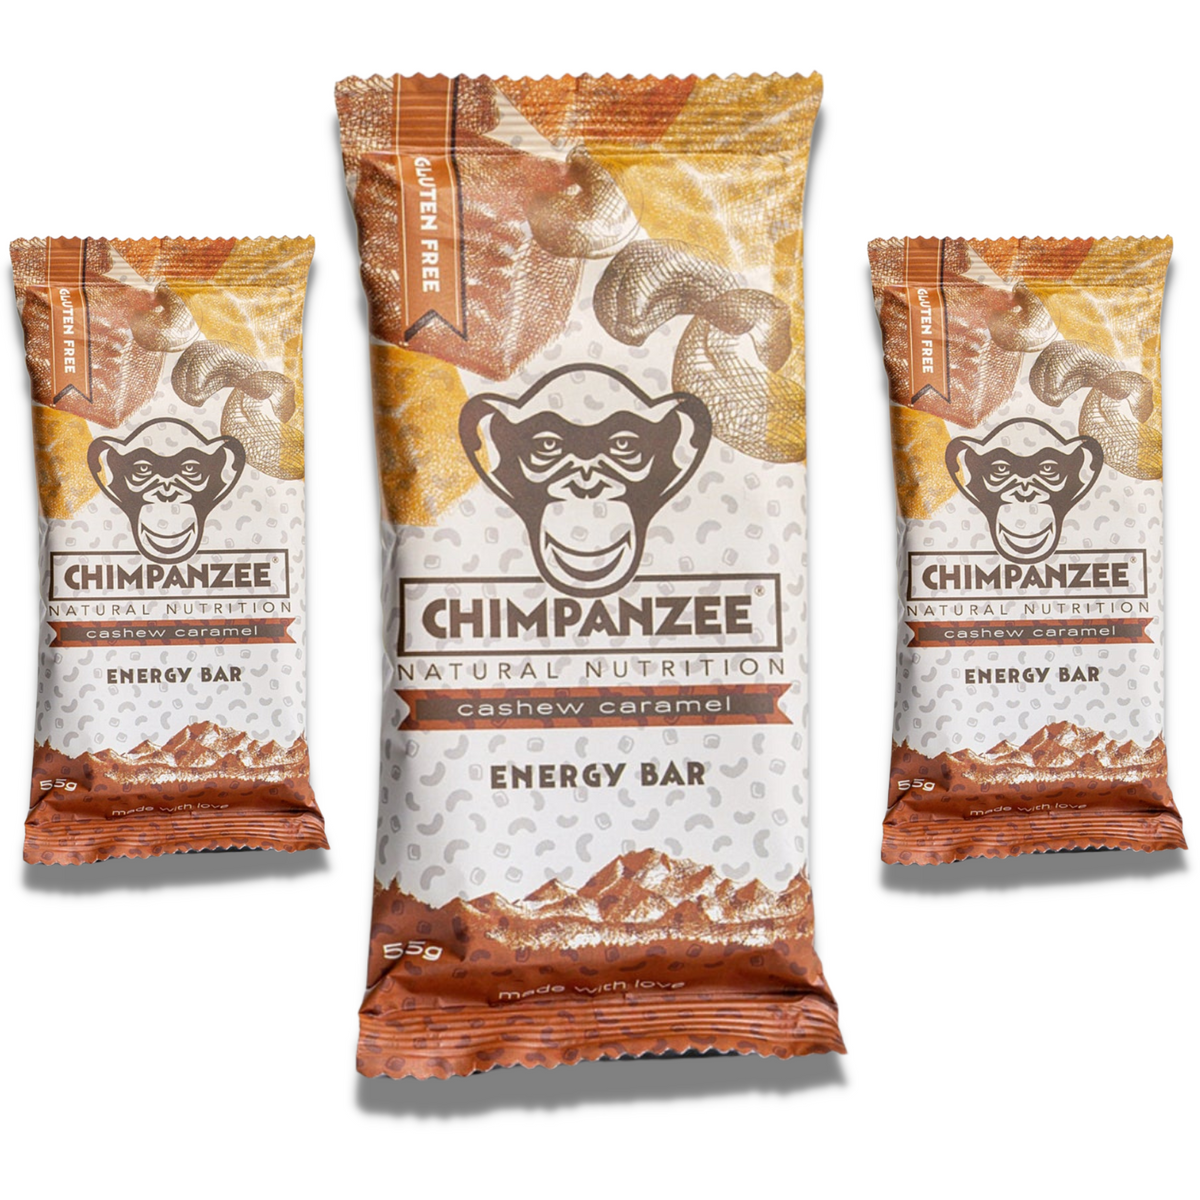 Chimpanzee Energy Bar - Cashew Caramel 3-Pack